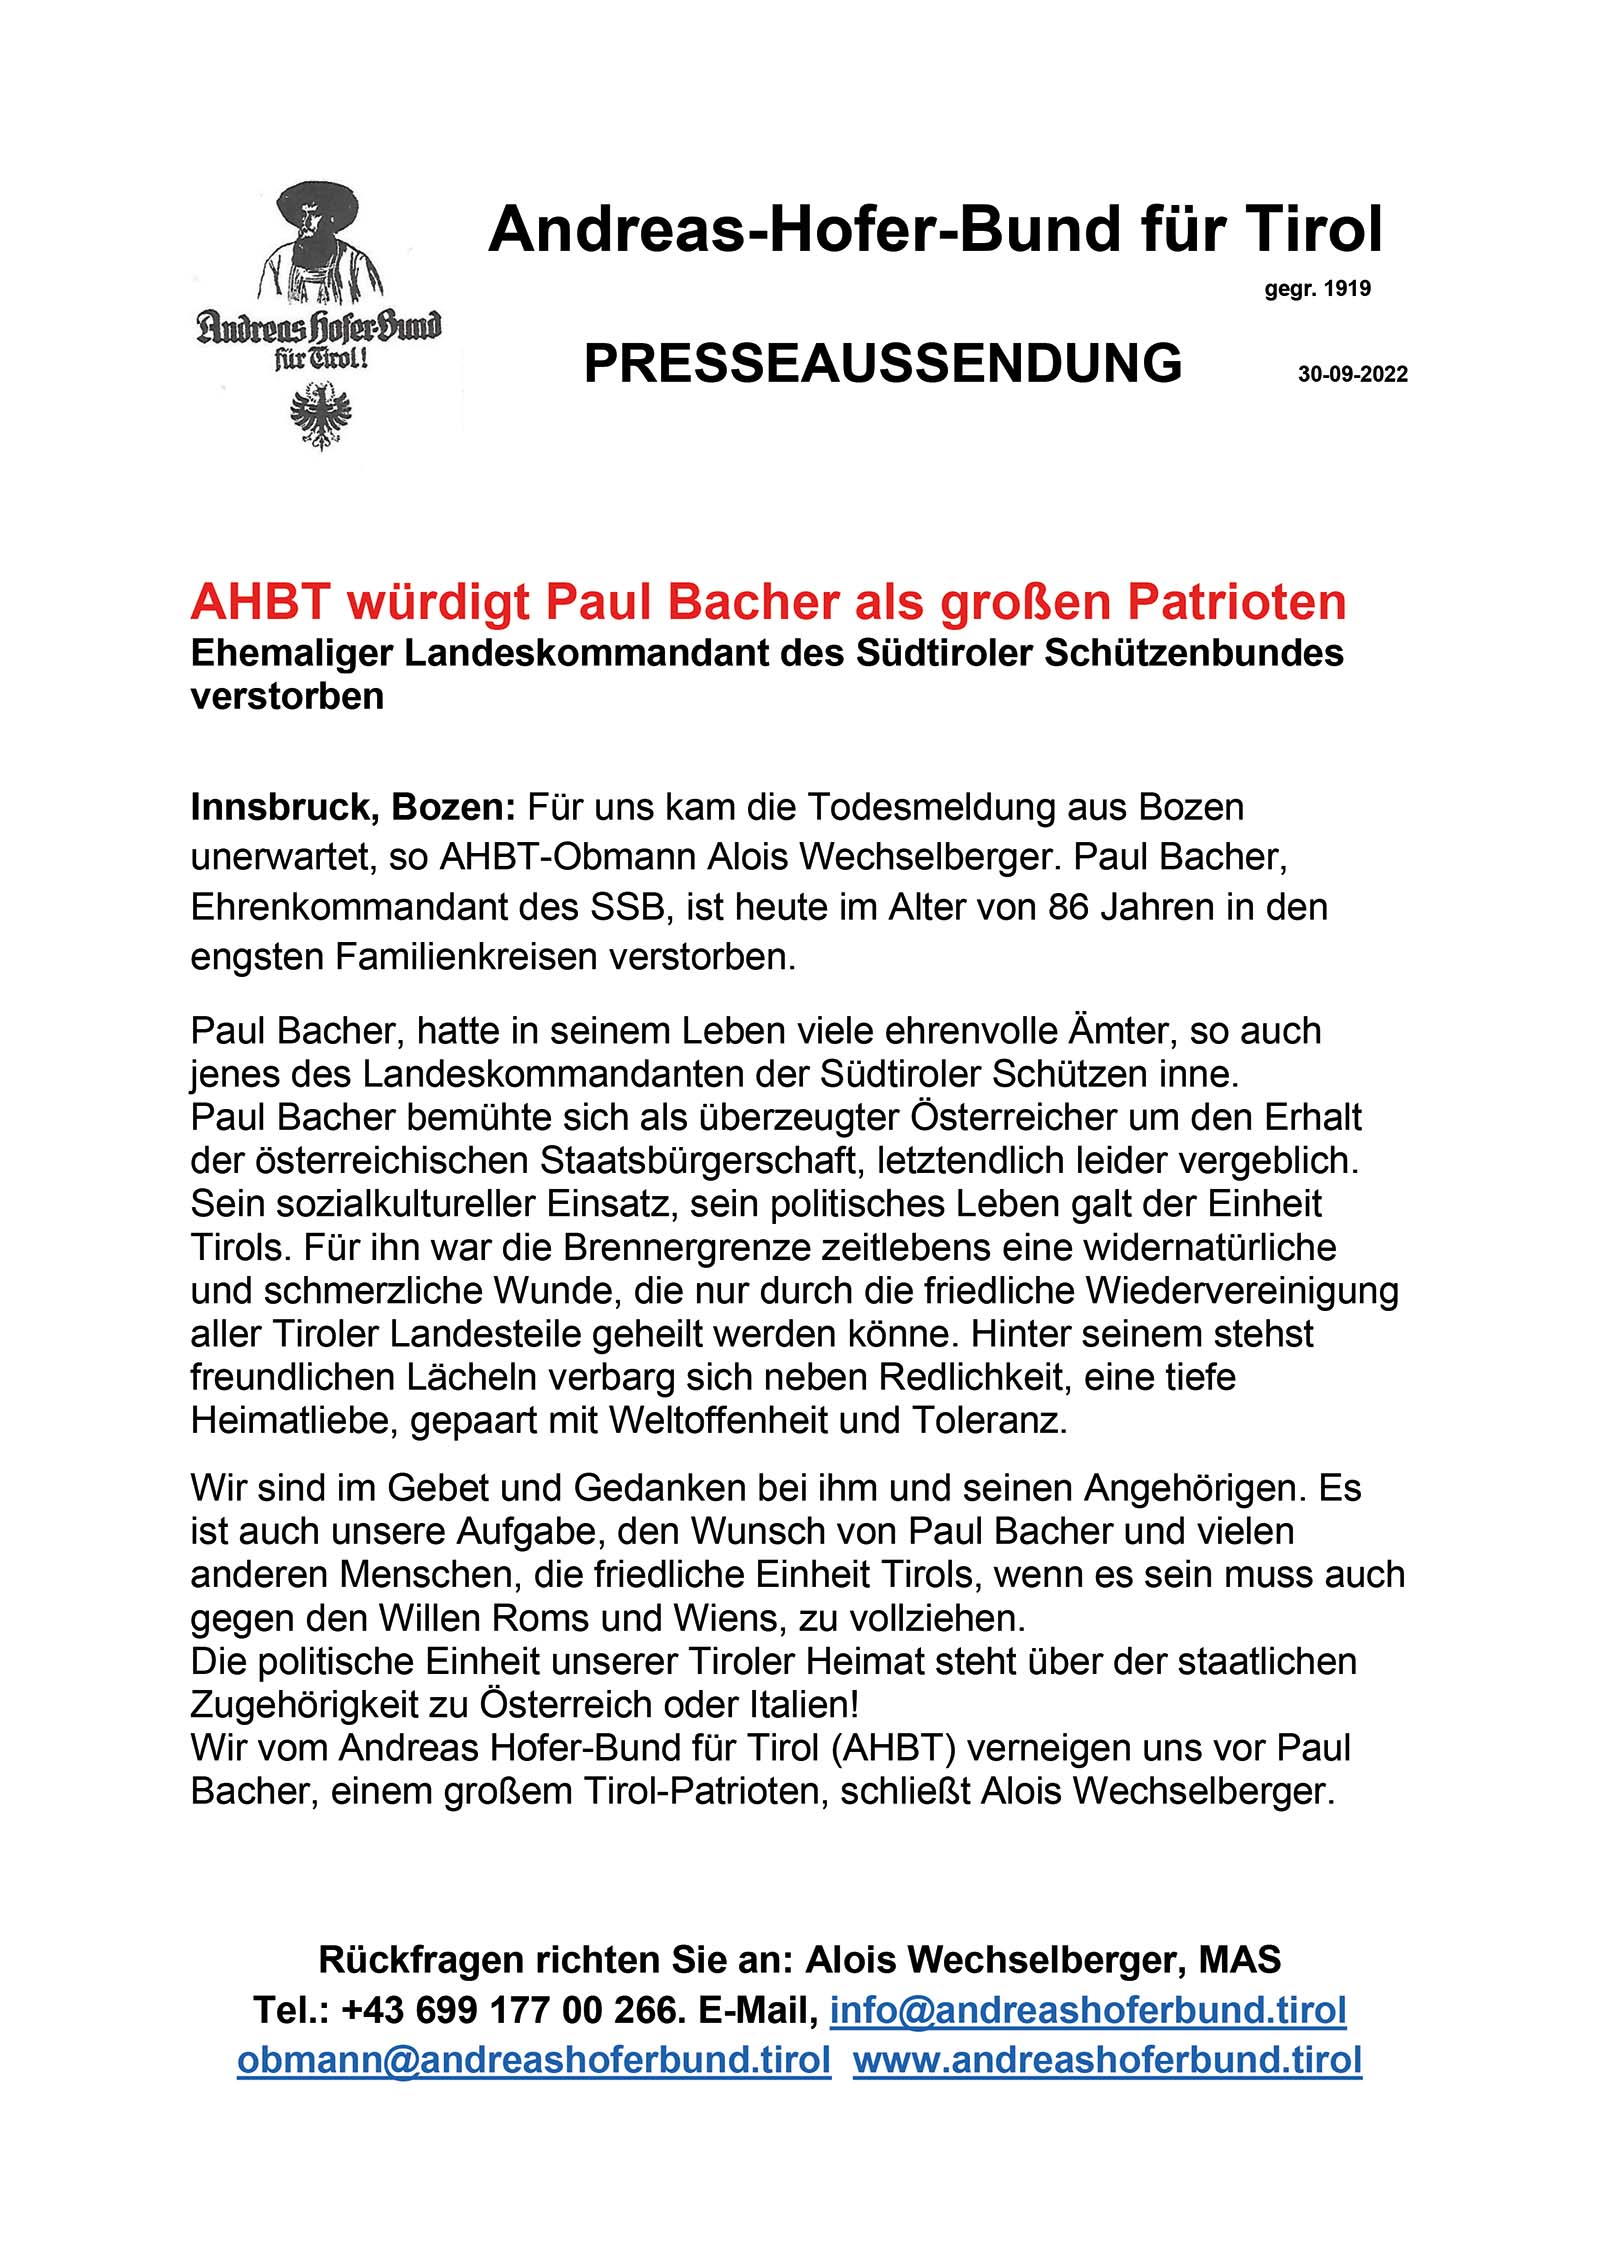 Paul Bacher – ein großer Tirol-Patriot – ist tot!